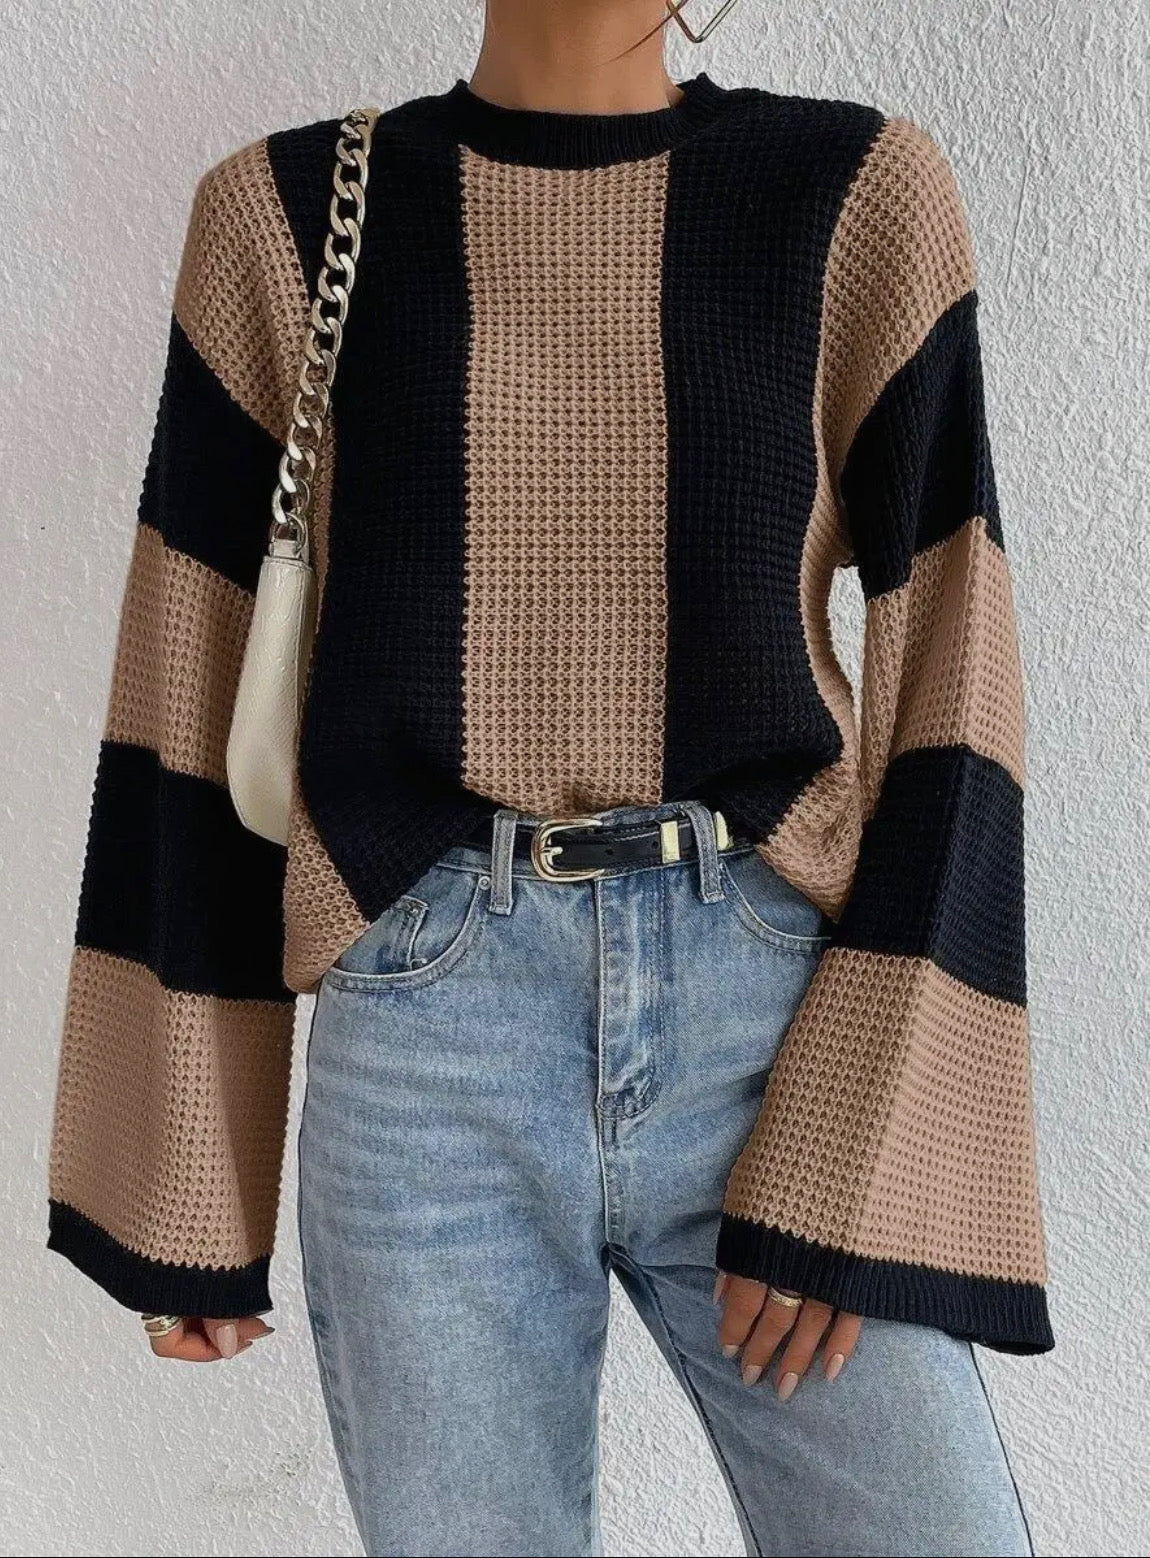 Black and Tan Striped Sweater